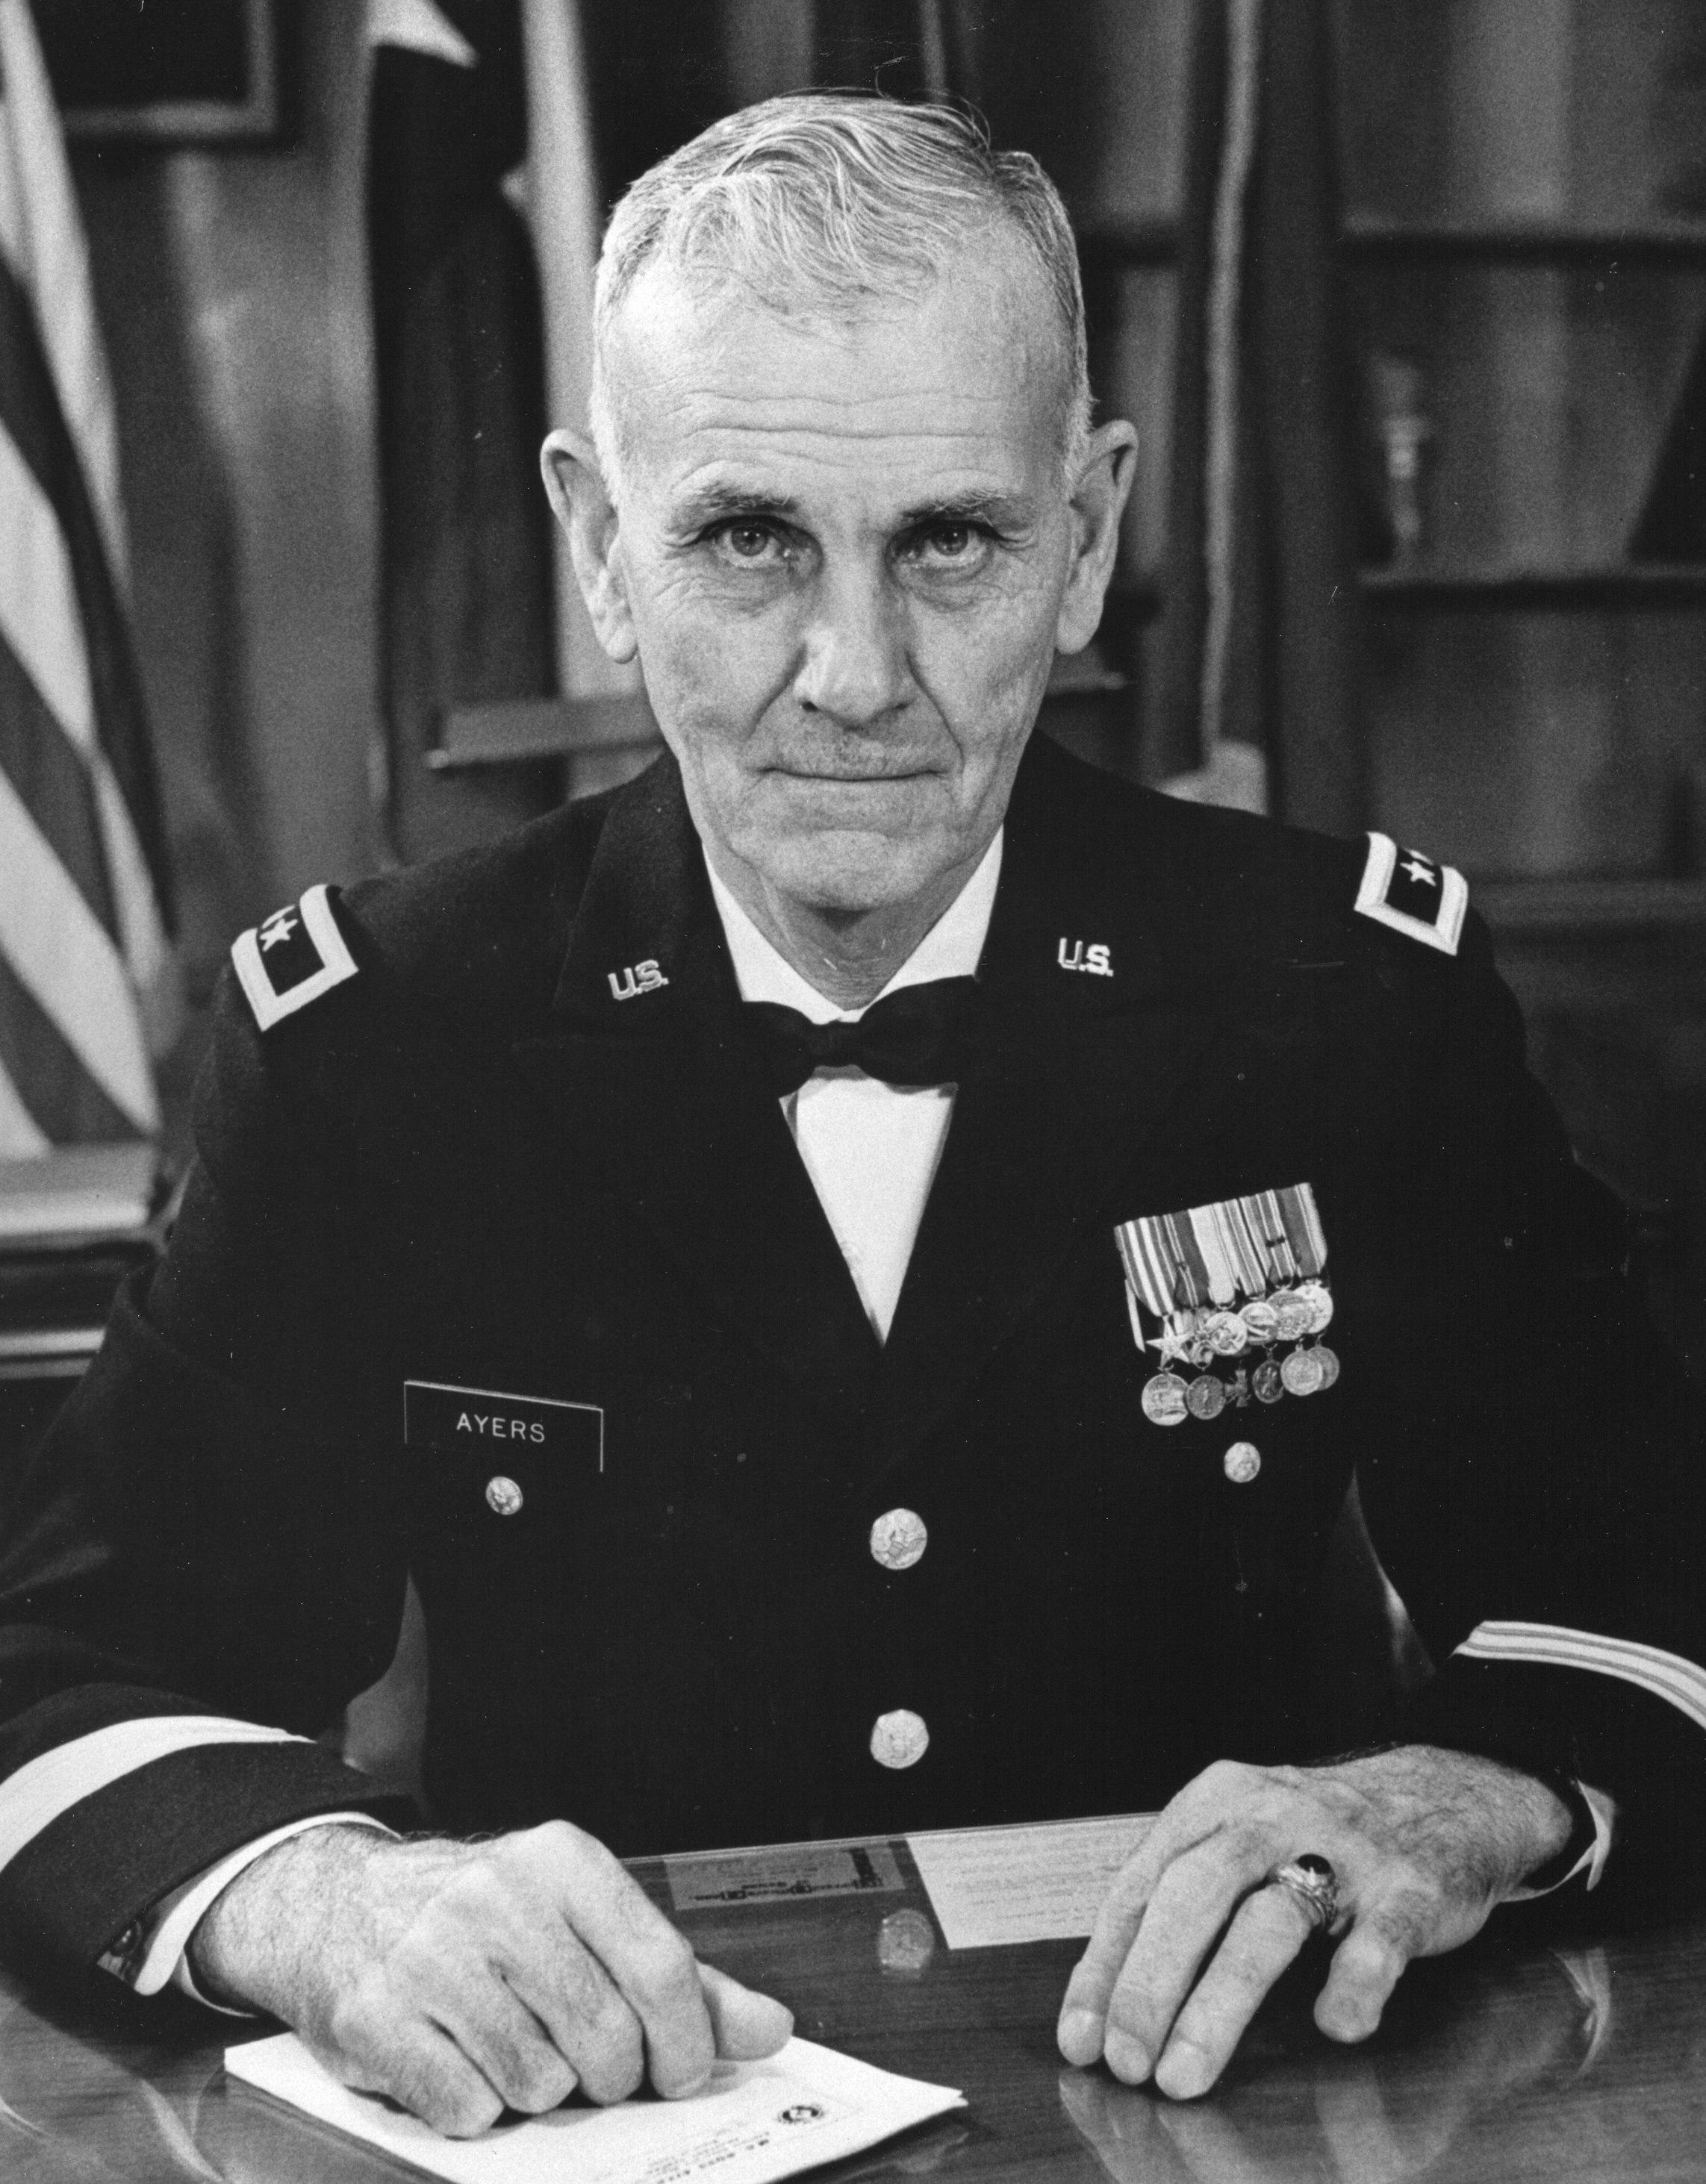 Lieutenant General Ross Ayers